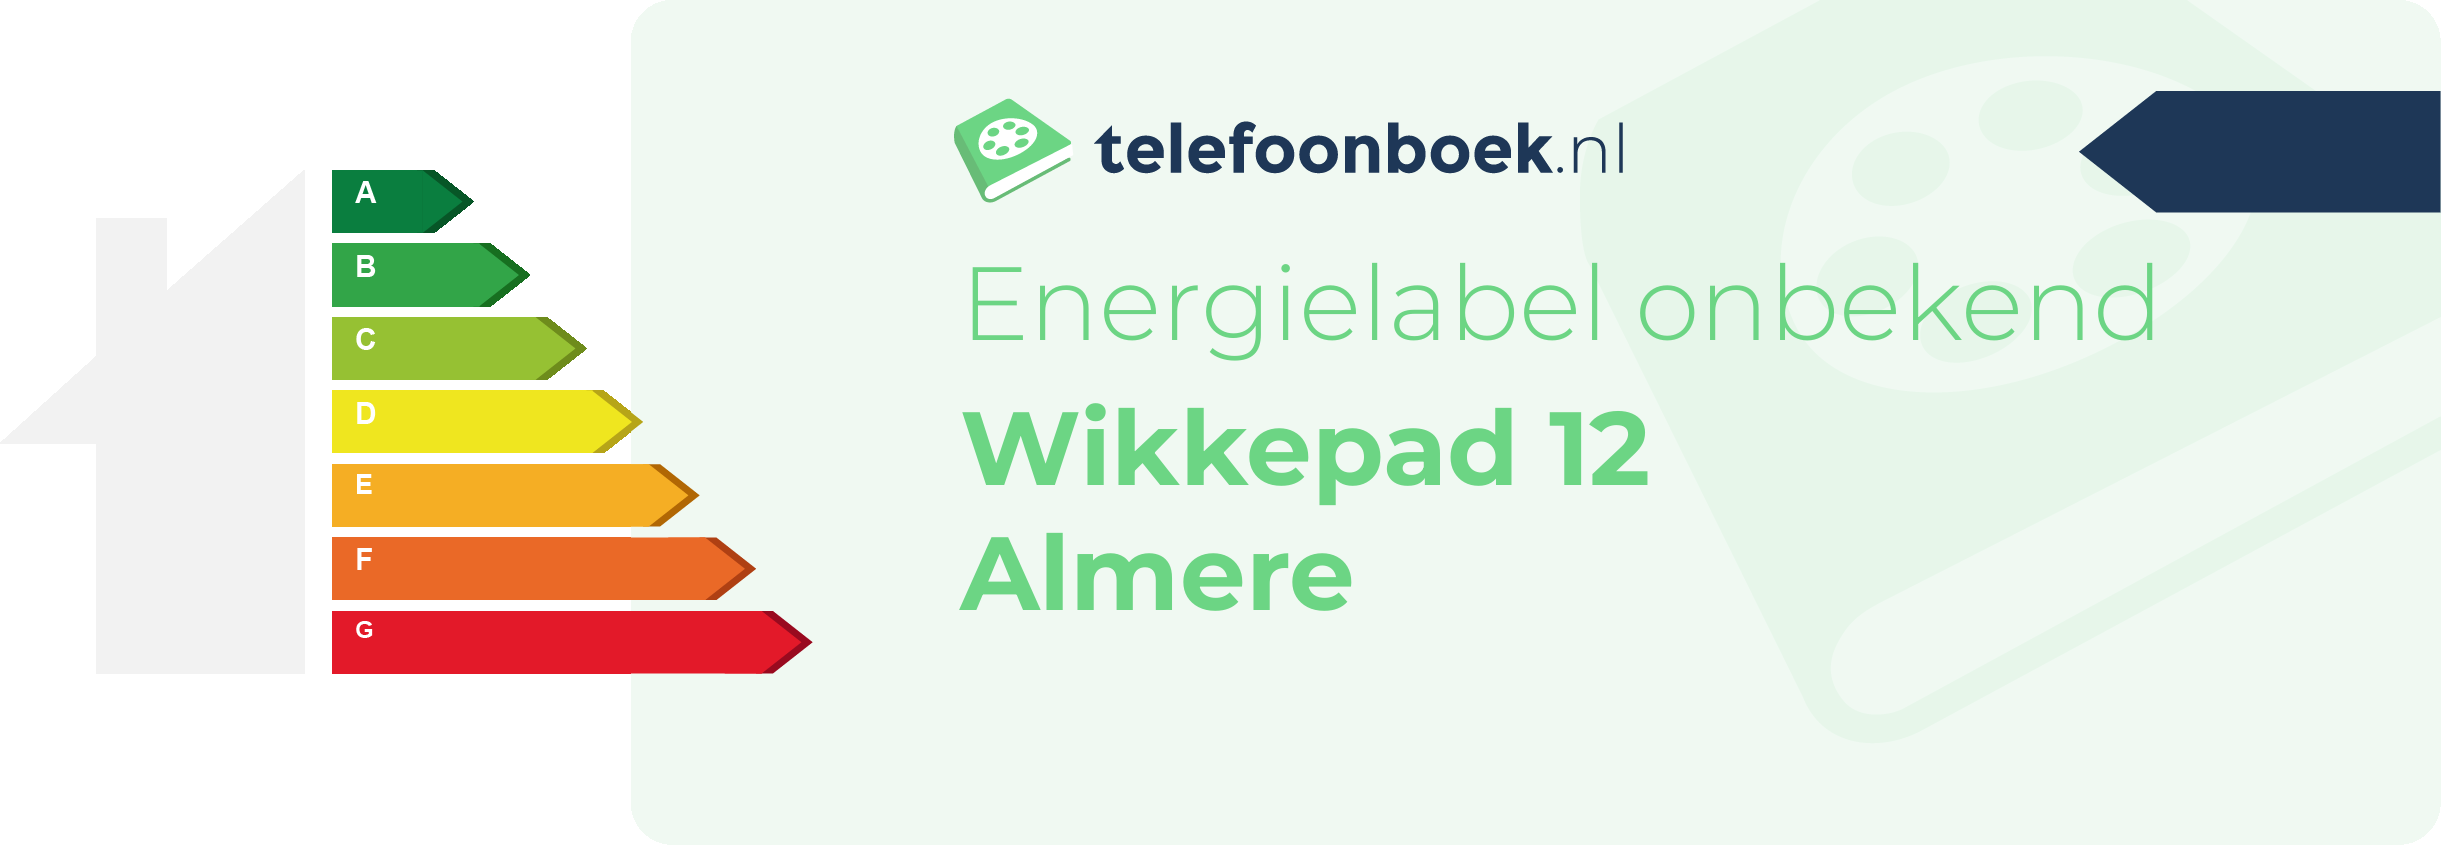 Energielabel Wikkepad 12 Almere